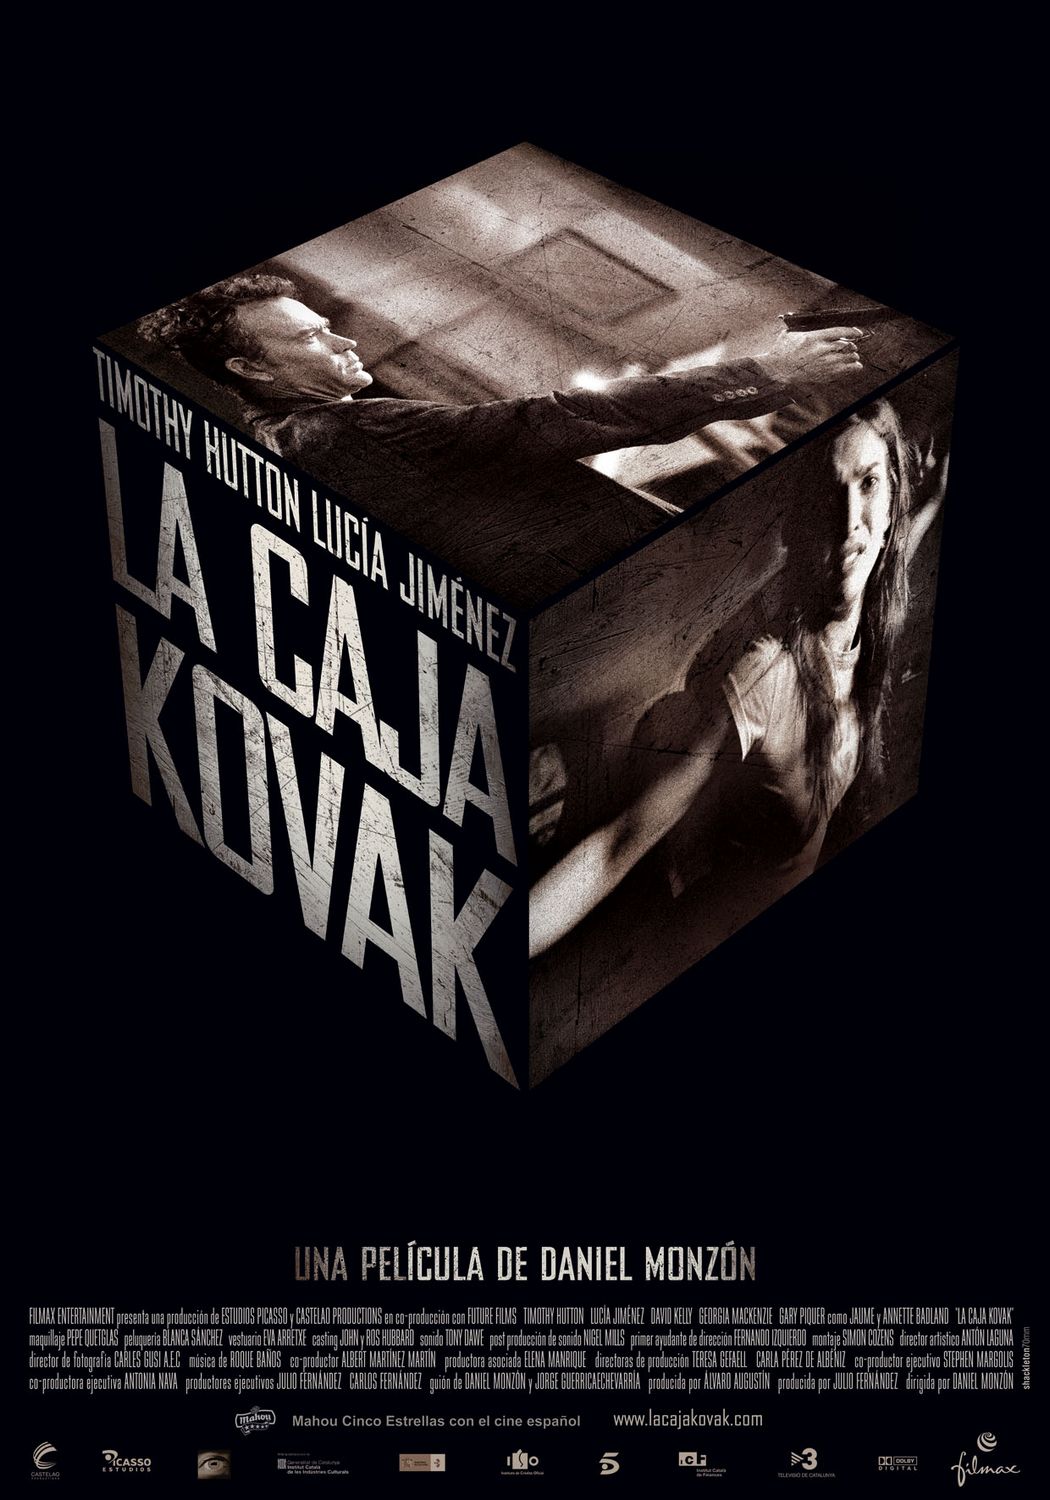 Extra Large Movie Poster Image for Caja Kovak, La 